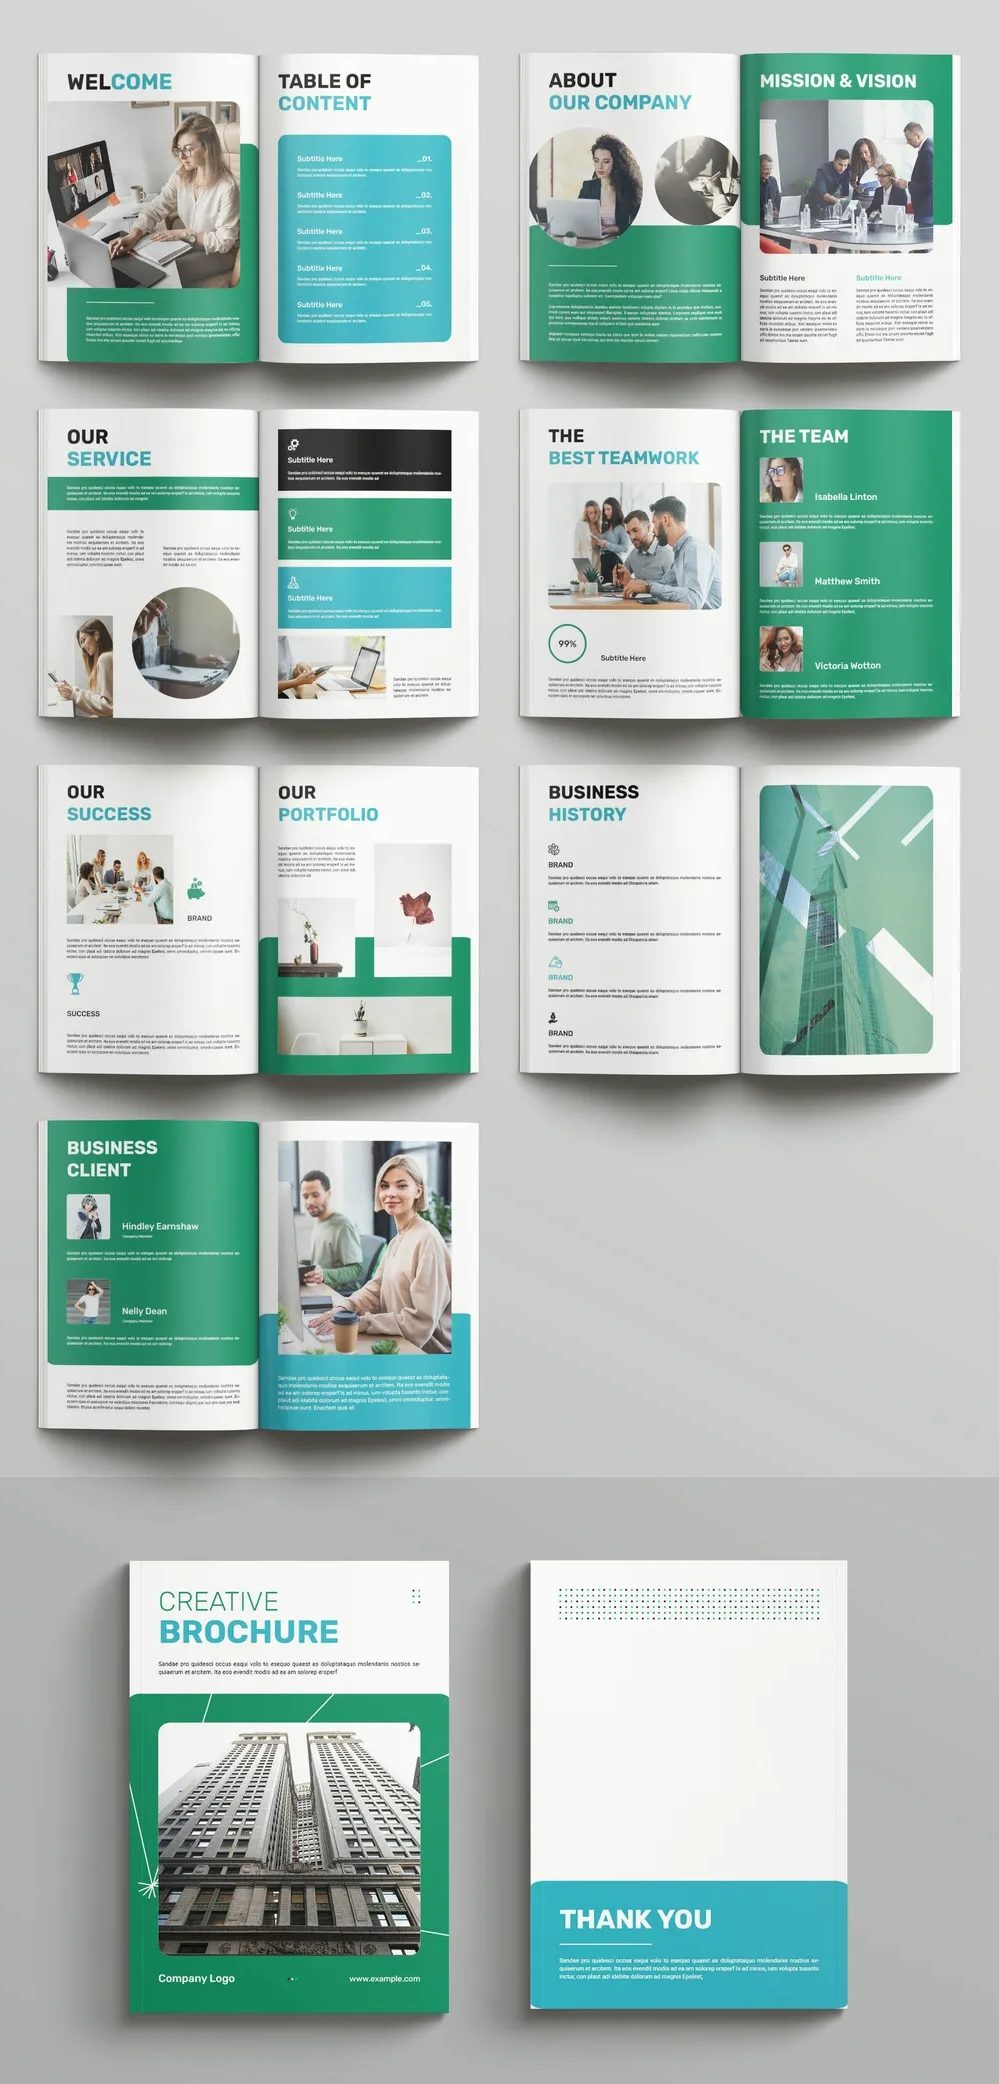 Adobestock - Corporate Brochure Design Layout Template 716694325